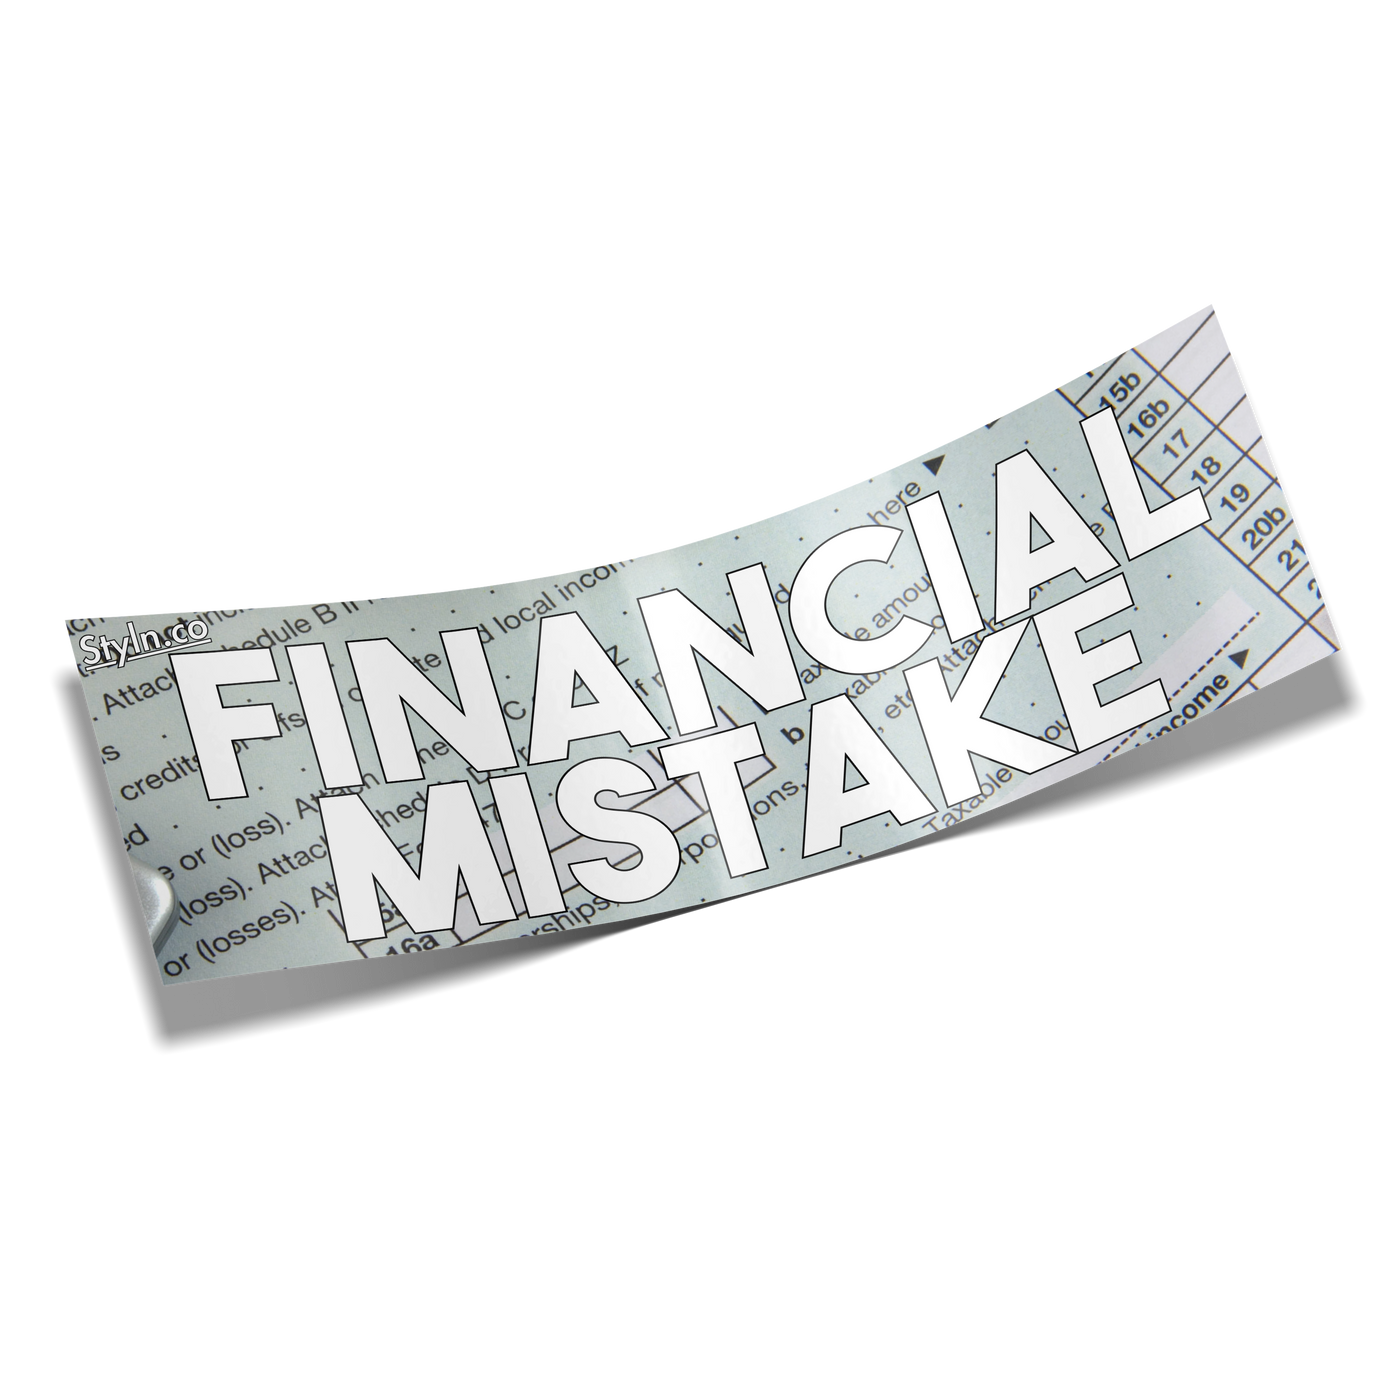 SLAP FINANCIAL MISTAKE